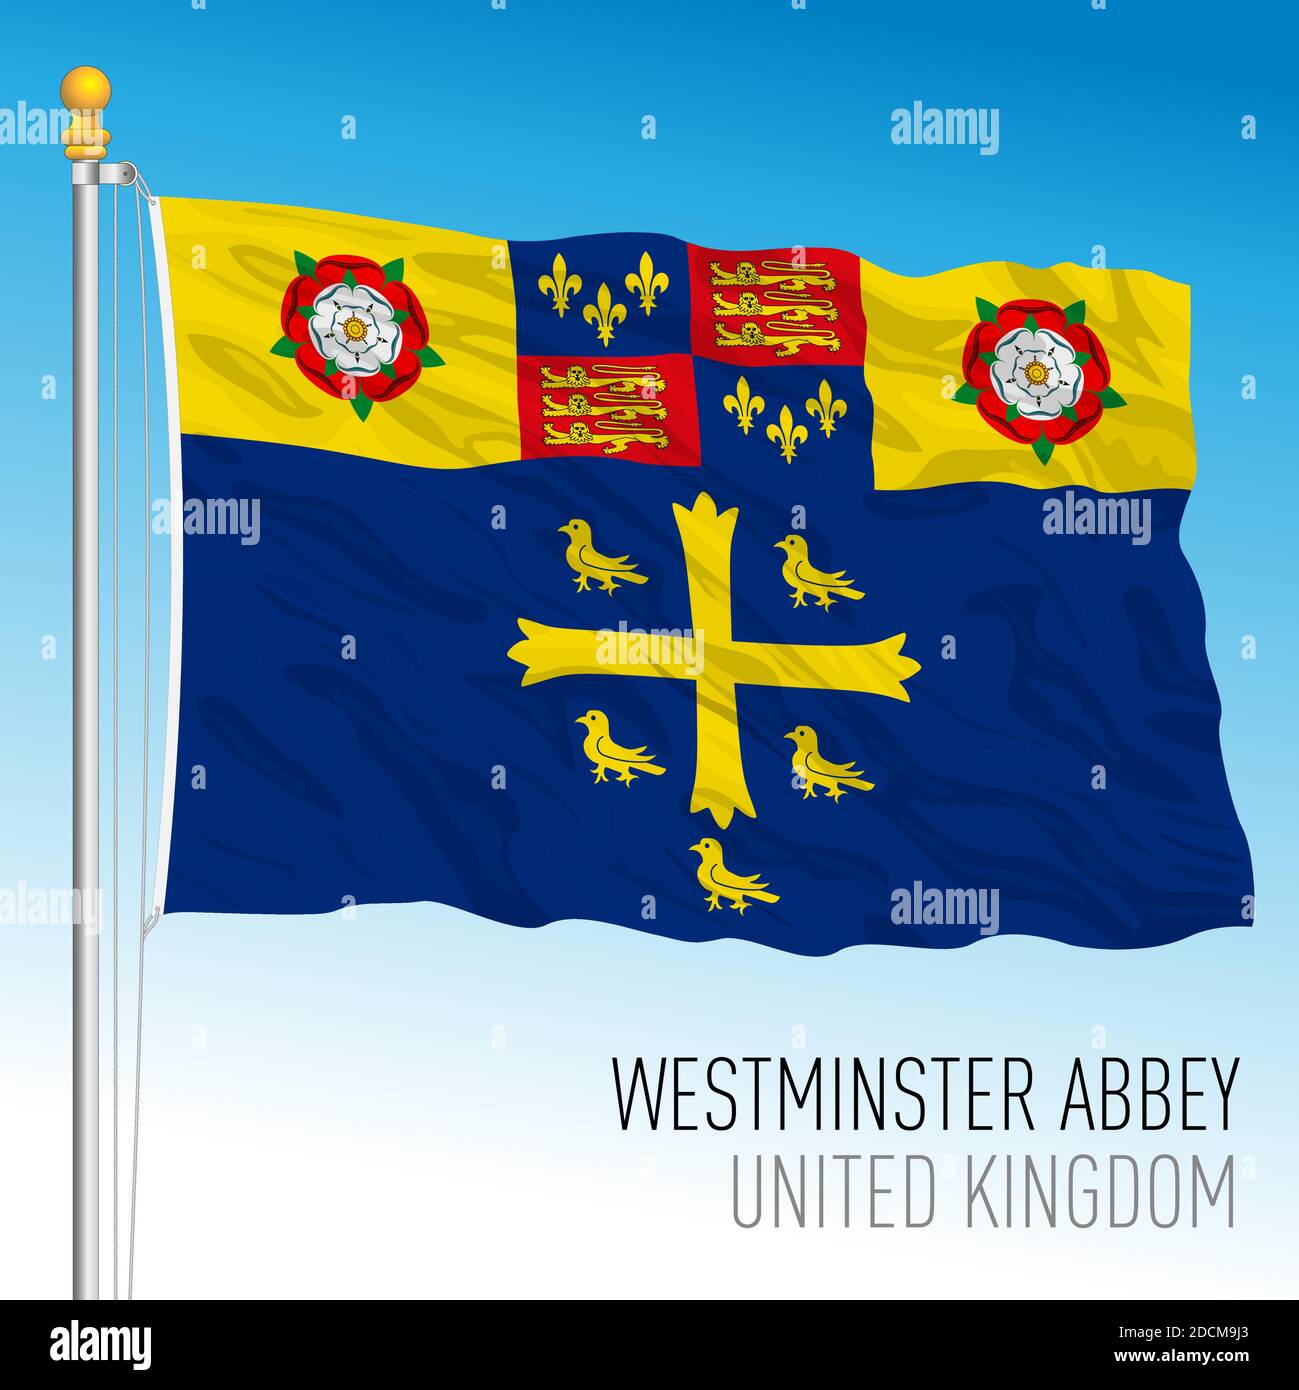 Westminster Abbey banner flag, United Kingdom, vector illustration Stock Vector